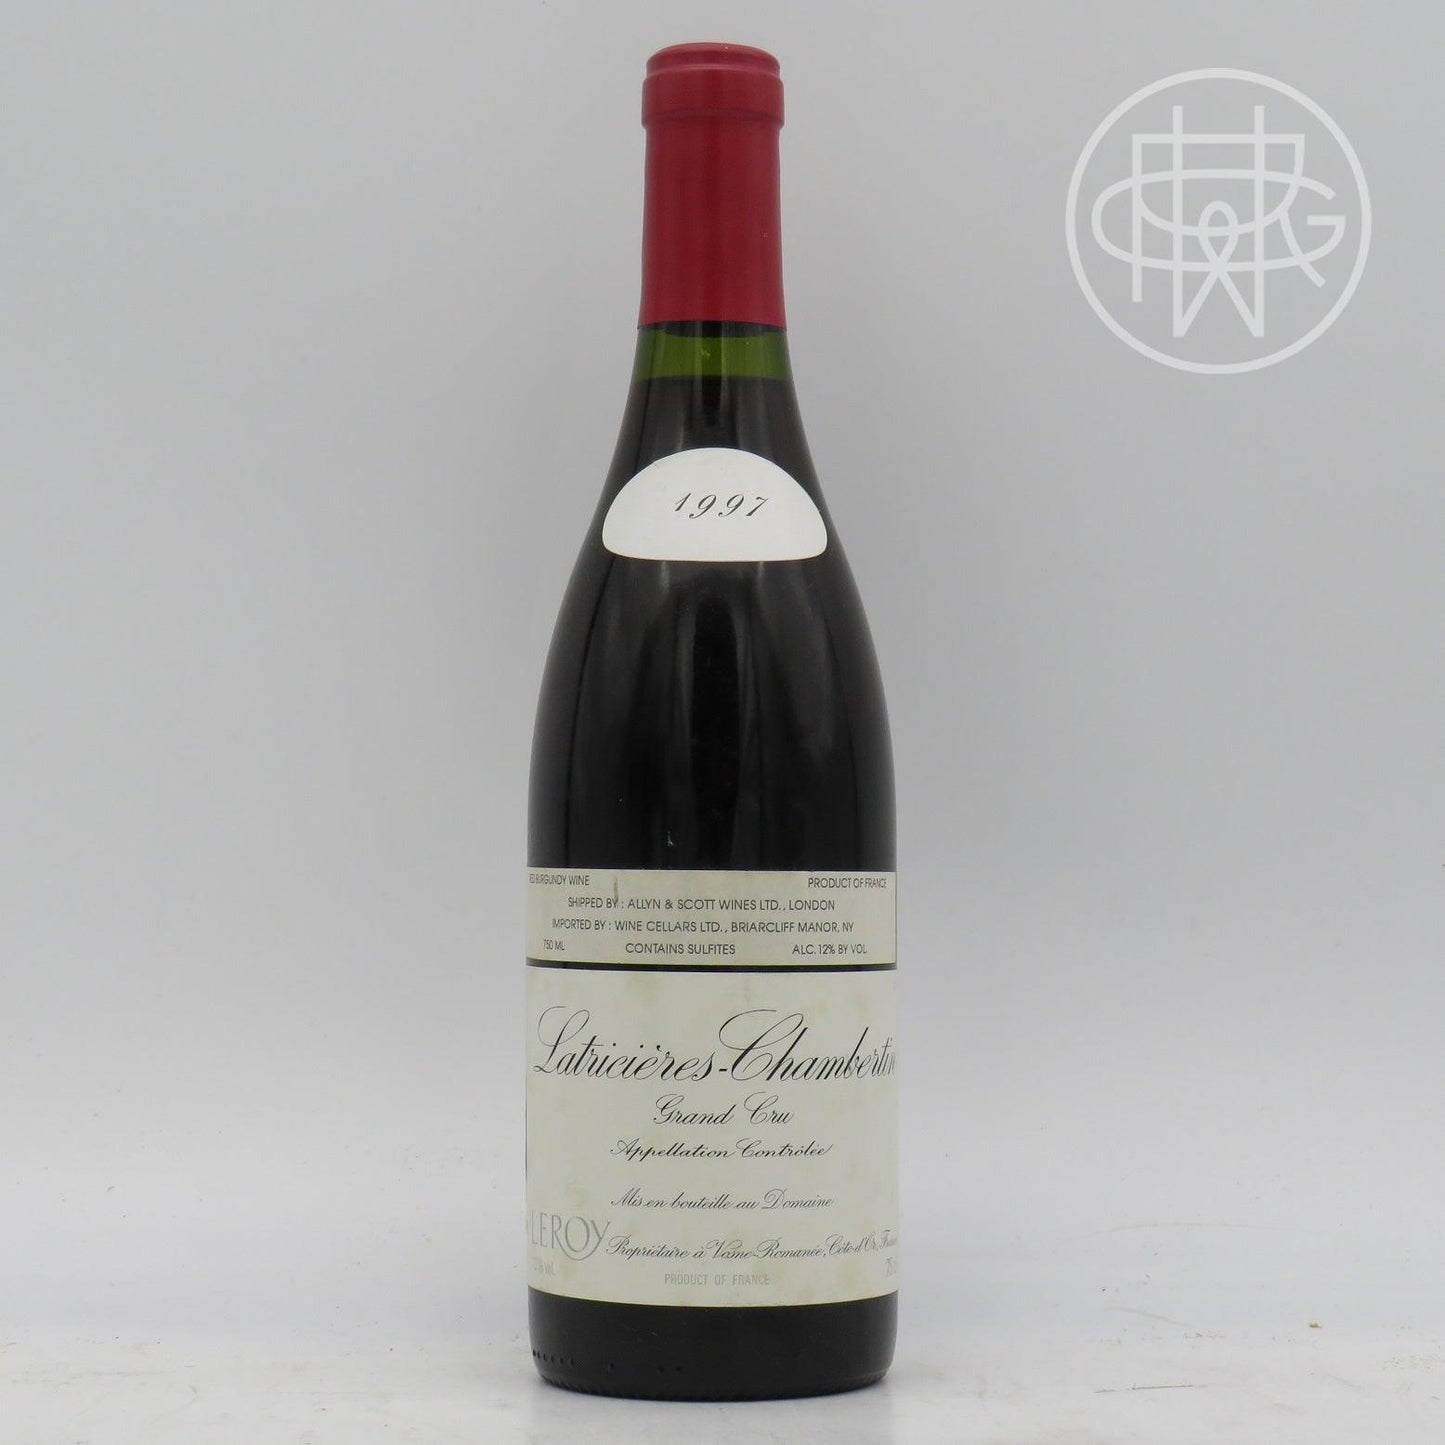 Leroy Latricieres Chambertin 1997 750mL - GRW Wine Collection